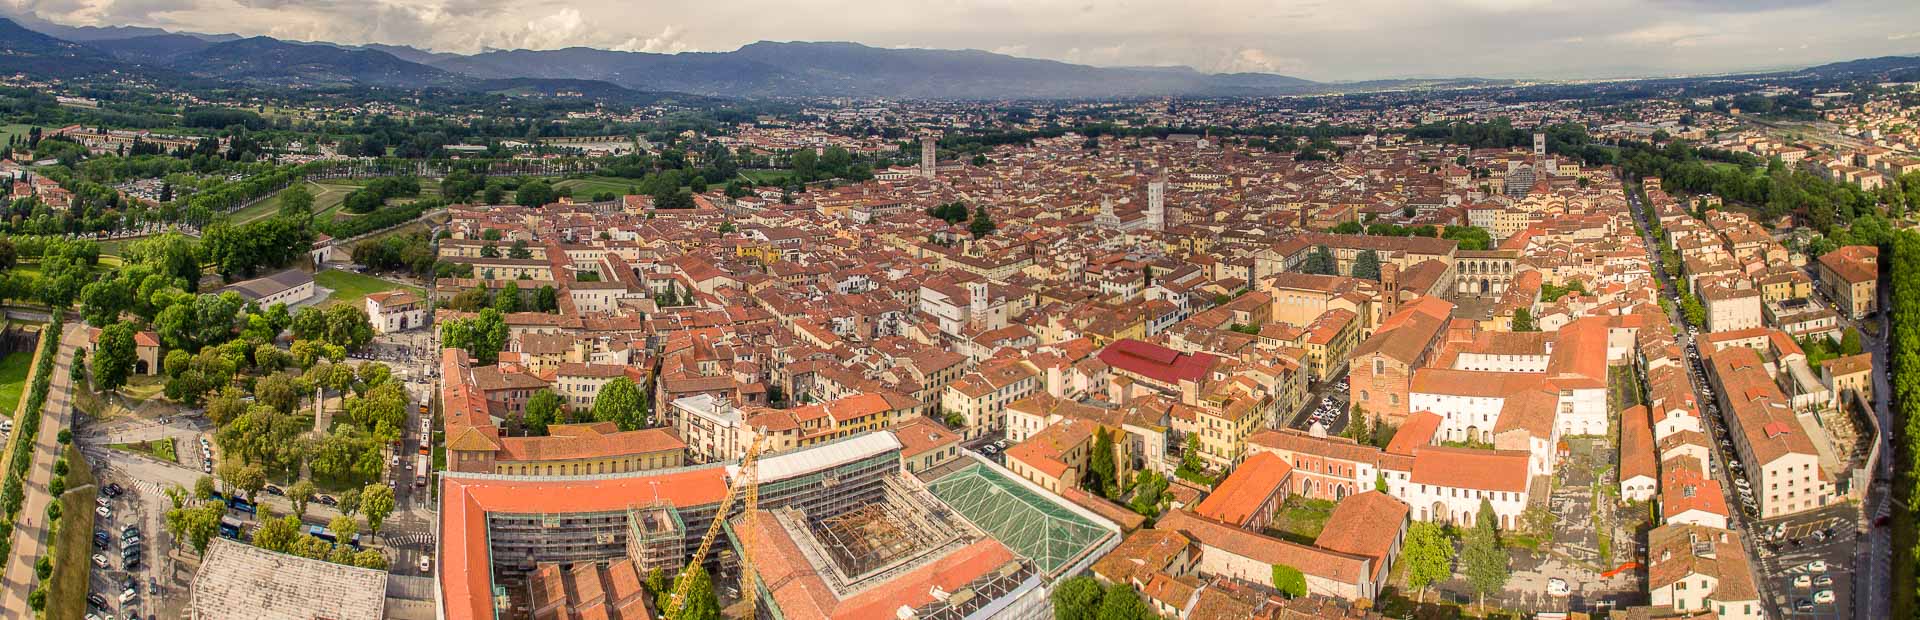 Panorama da cidade de Lucca